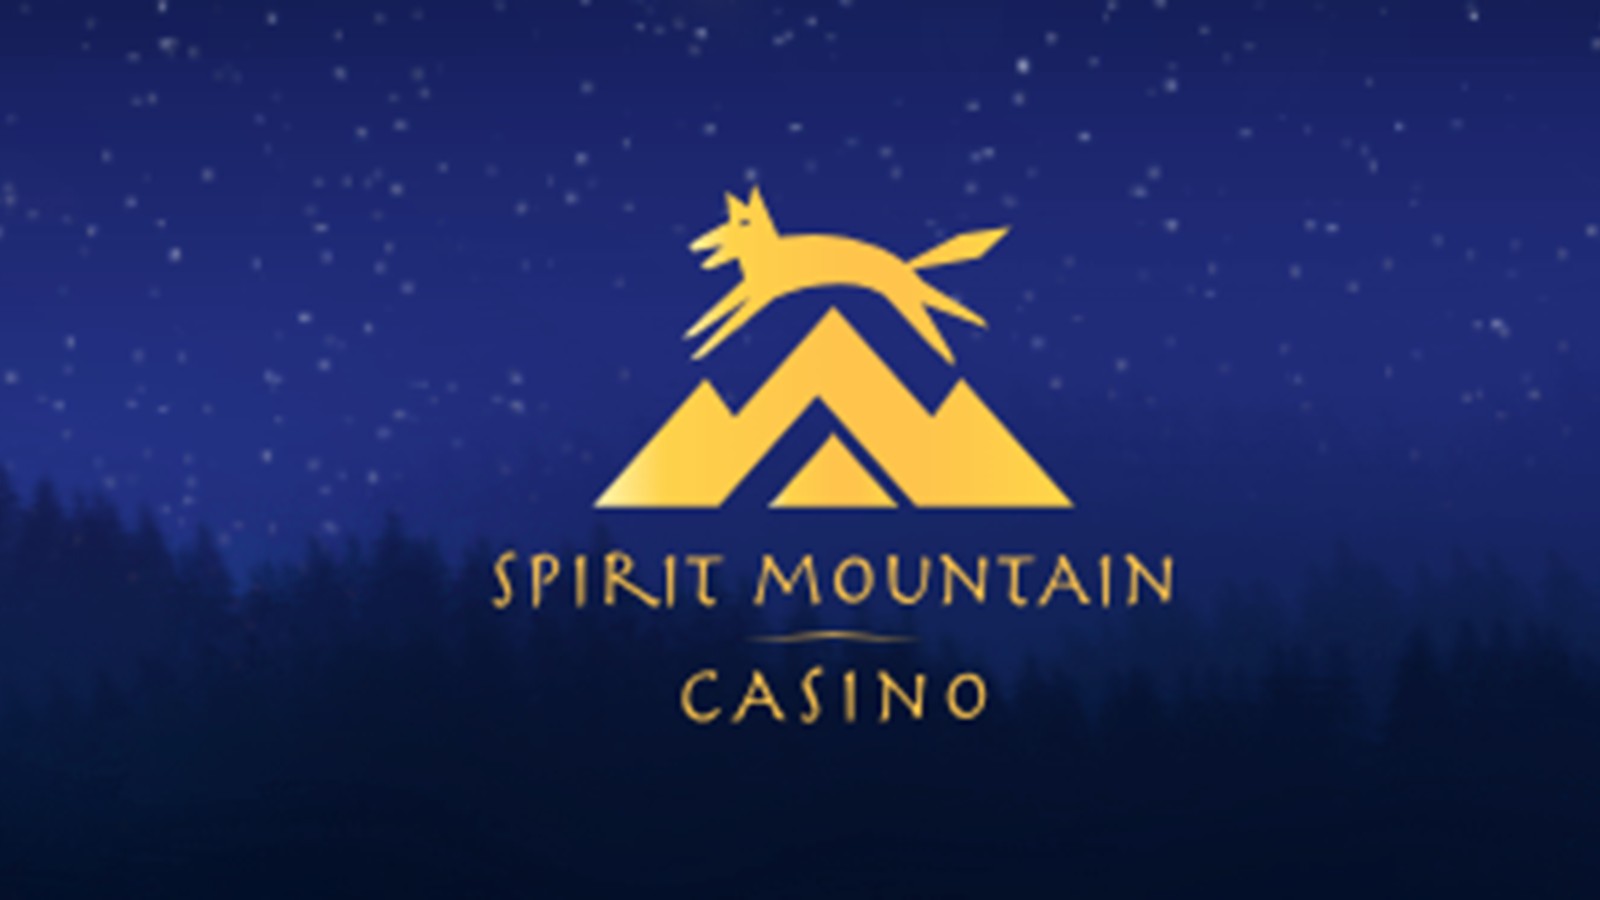 spirit mountain casino entertainment